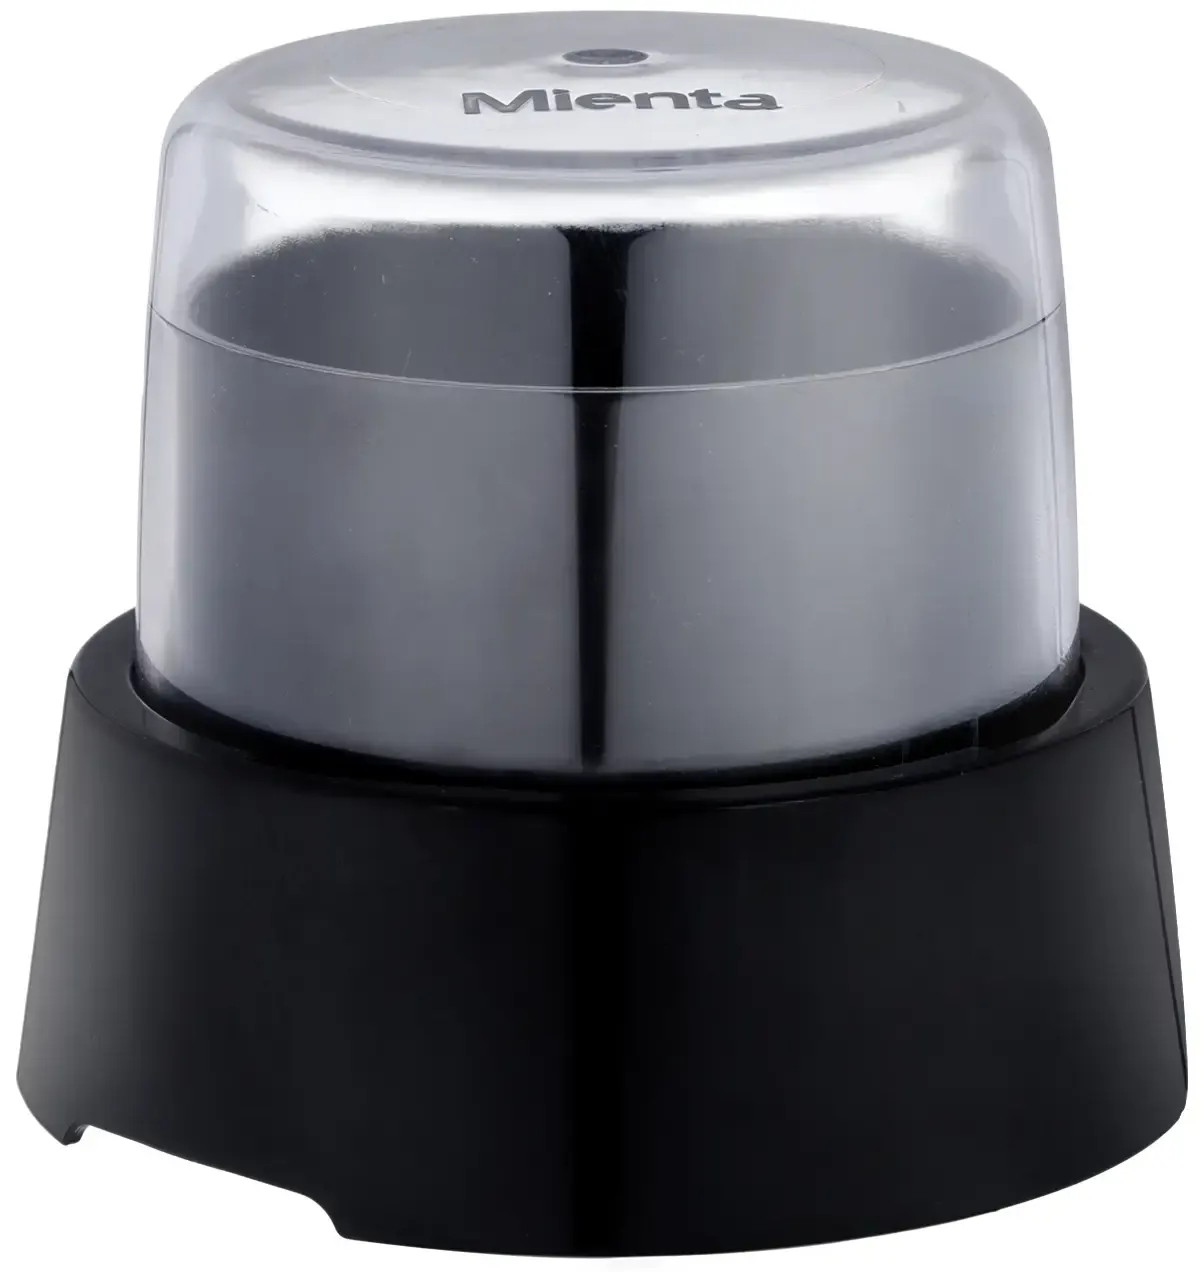 Mienta Electric Blender, 400 Watt, 1.75 Liter, 2 Mills, Black, BL1361B